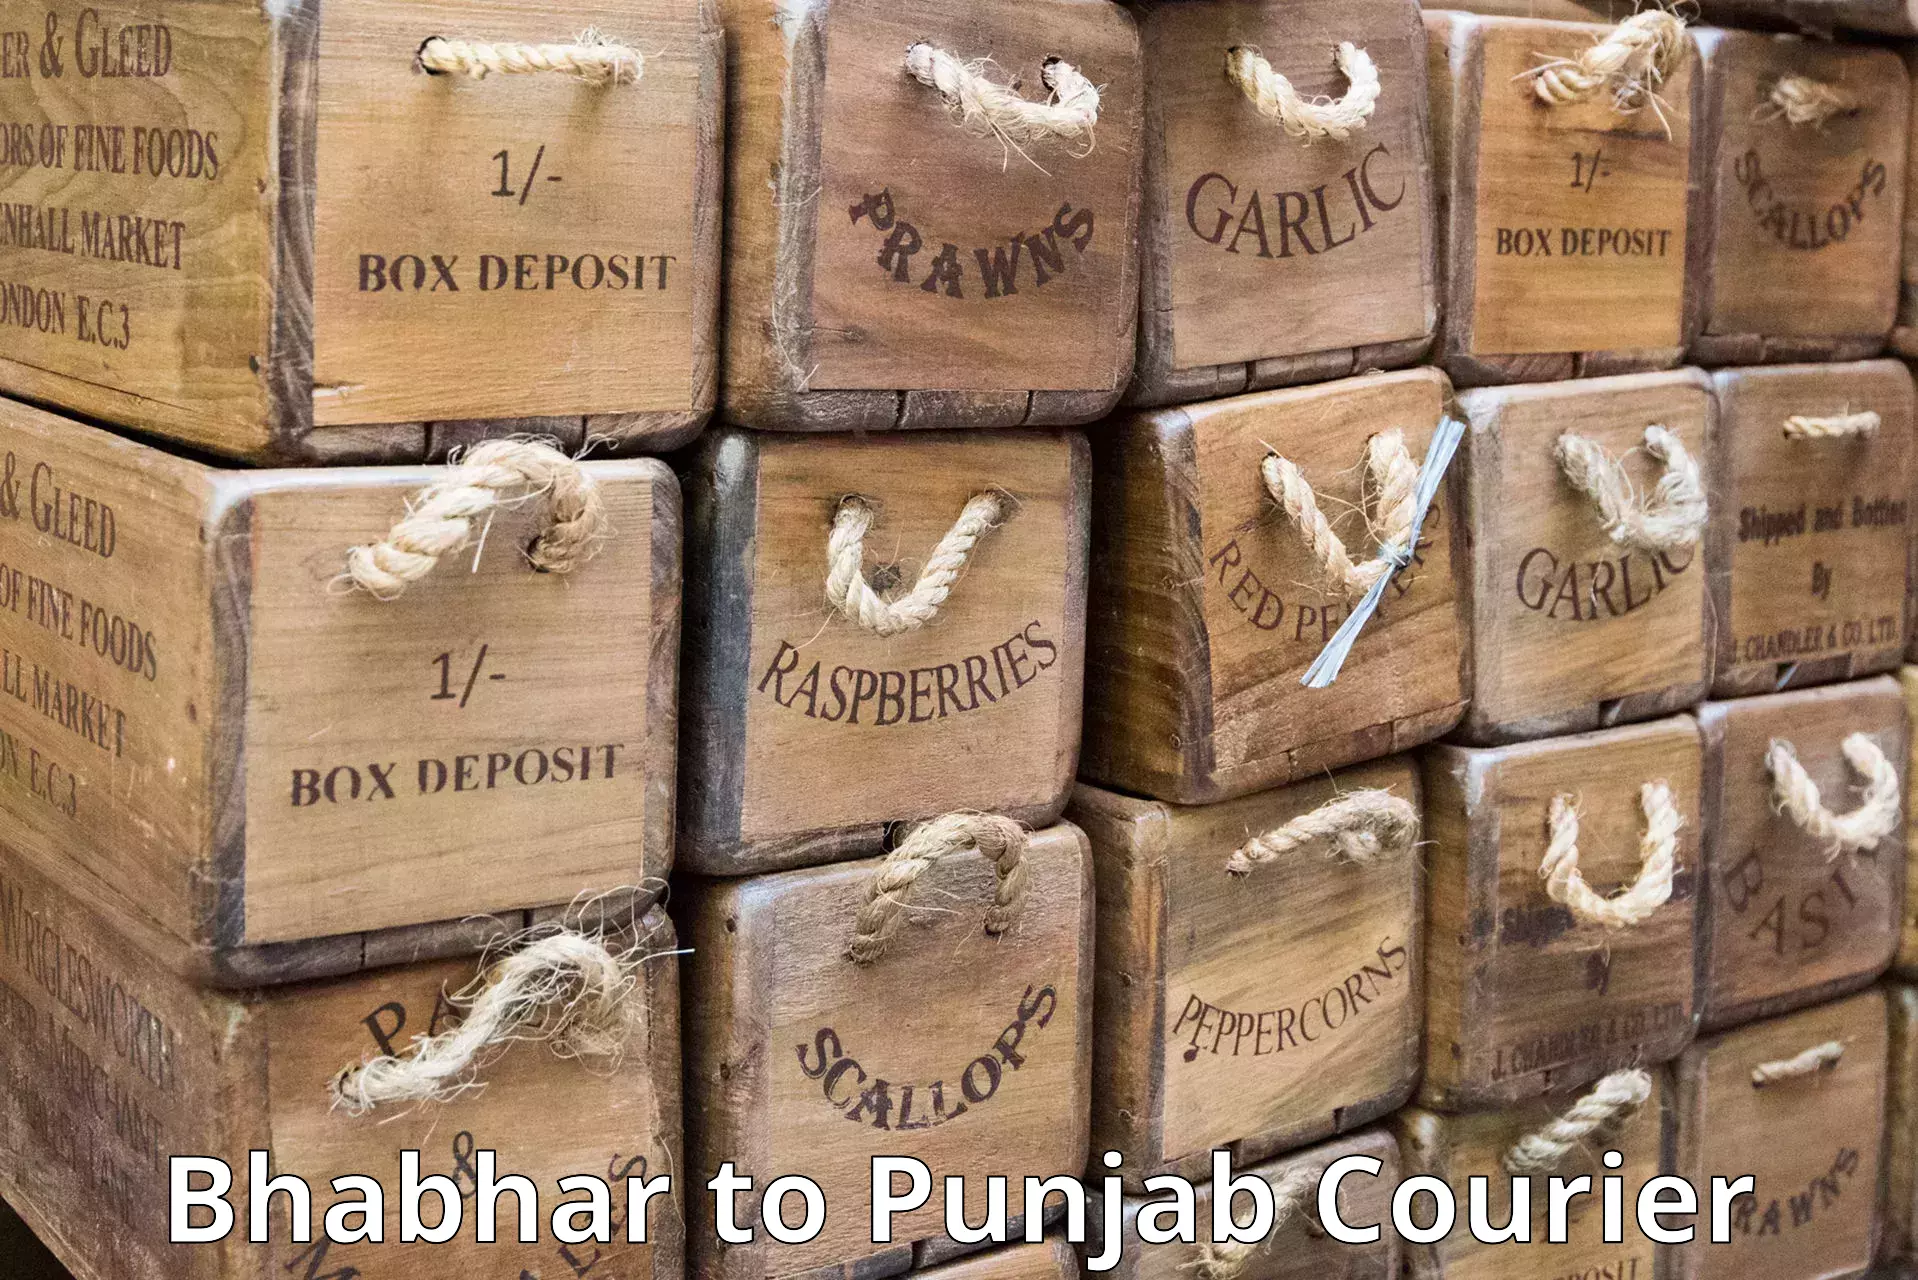 Parcel handling and care Bhabhar to Faridkot